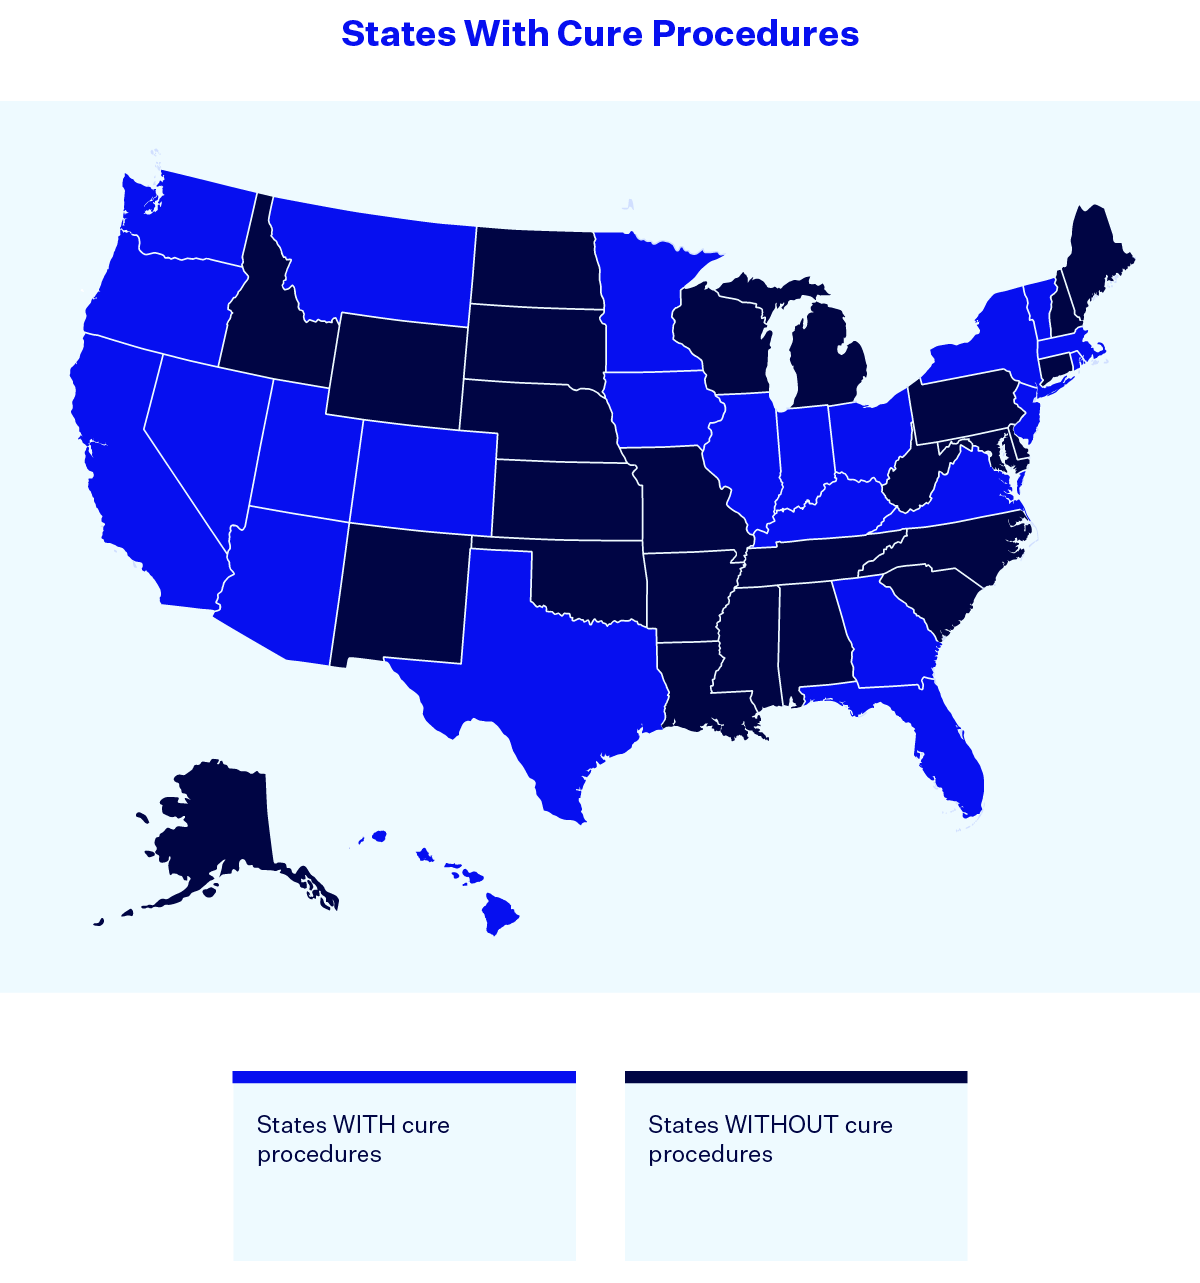 Map of the United States highlighting the states WITH cure procedures: Arizona, California, Colorado, Florida, Georgia, Hawaii, Illinois, Indiana, Iowa, Kentucky, Massachusetts, Minnesota, Montana, Nevada, New Jersey, New York, Ohio, Oregon, Rhode Island, Texas, Utah, Vermont, Virginia and Washington